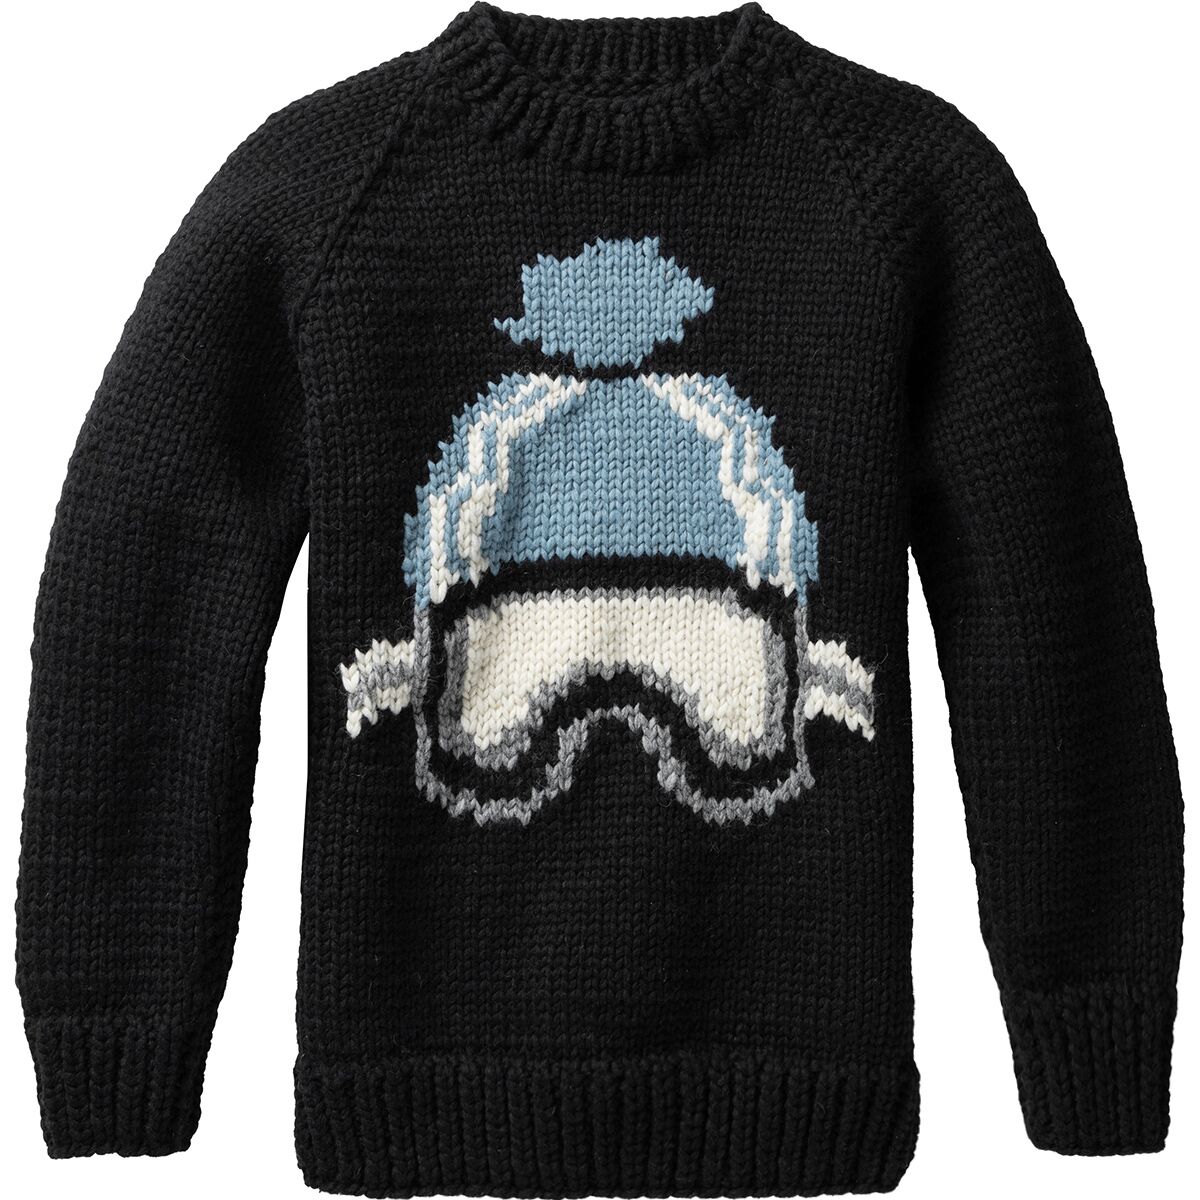 Kanata Hand Knits Goggles Sweater - Men's